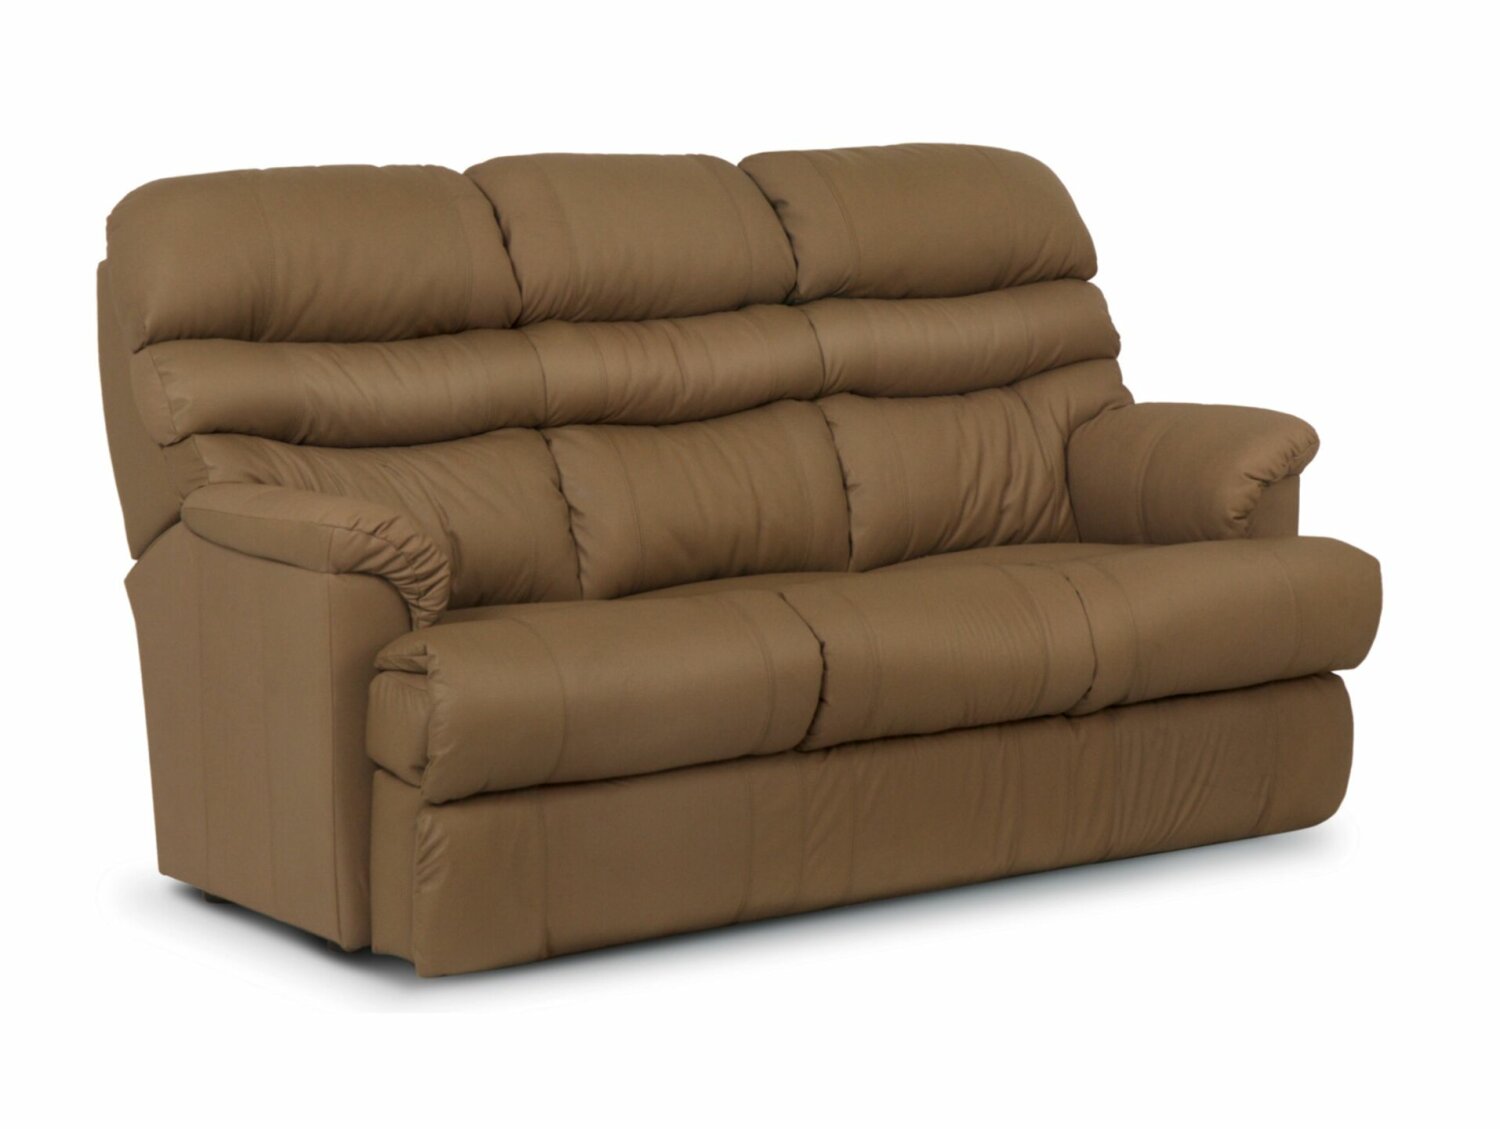 Cortland La-Z-Boy 3 Seater Sofa